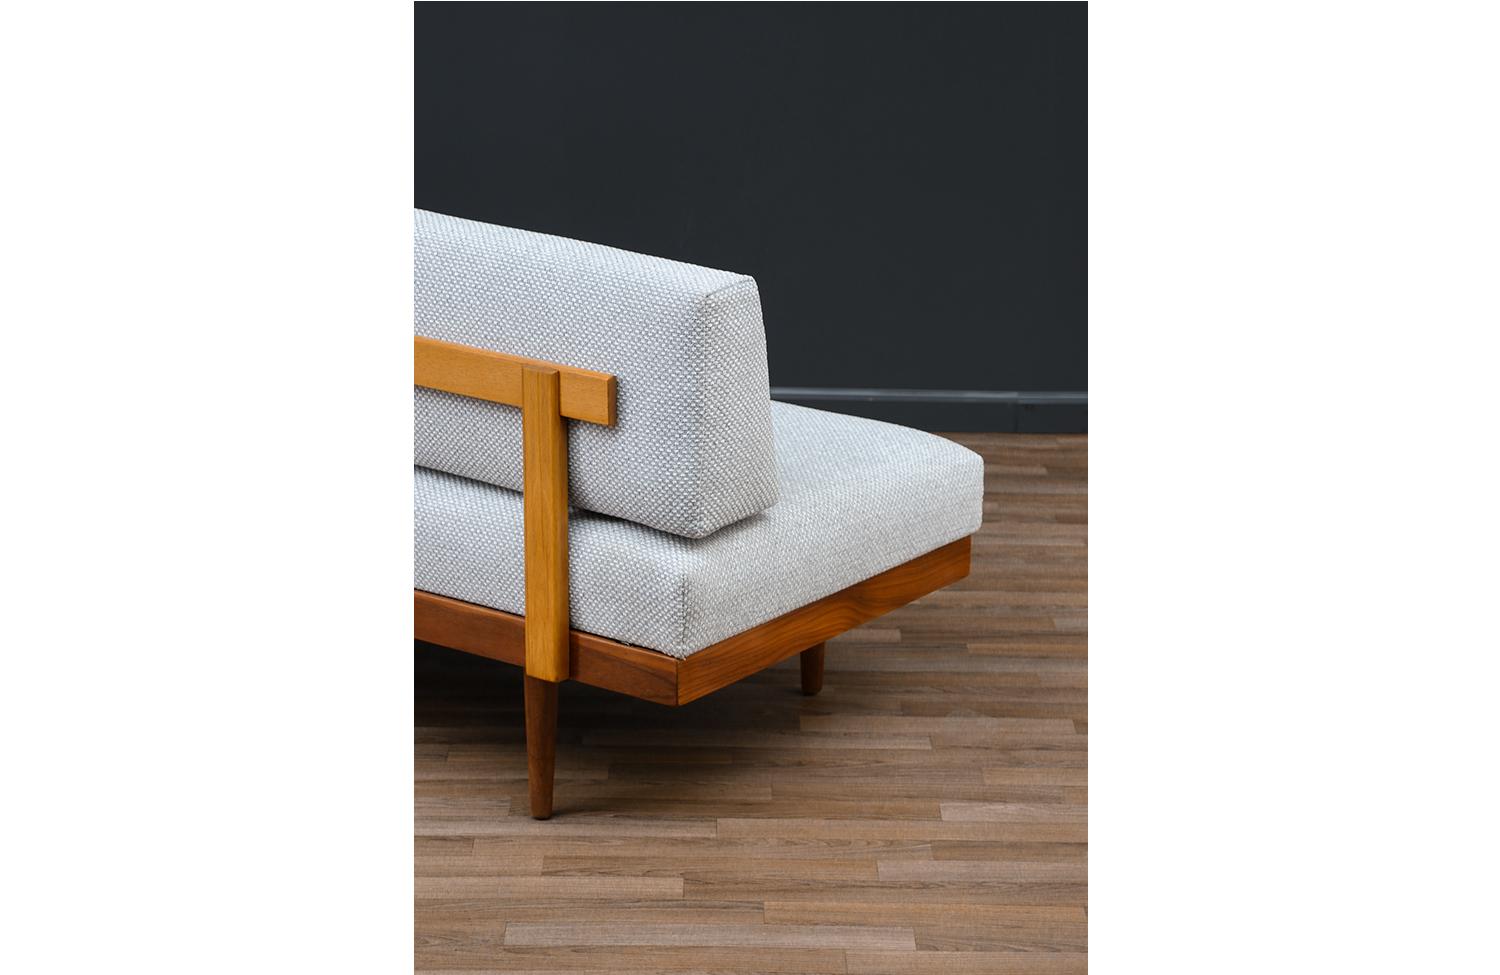 Mid-20th Century Expertly Restored - Edvard Kindt-Larsen Teak Daybed Sofa for Gustav Bahus For Sale